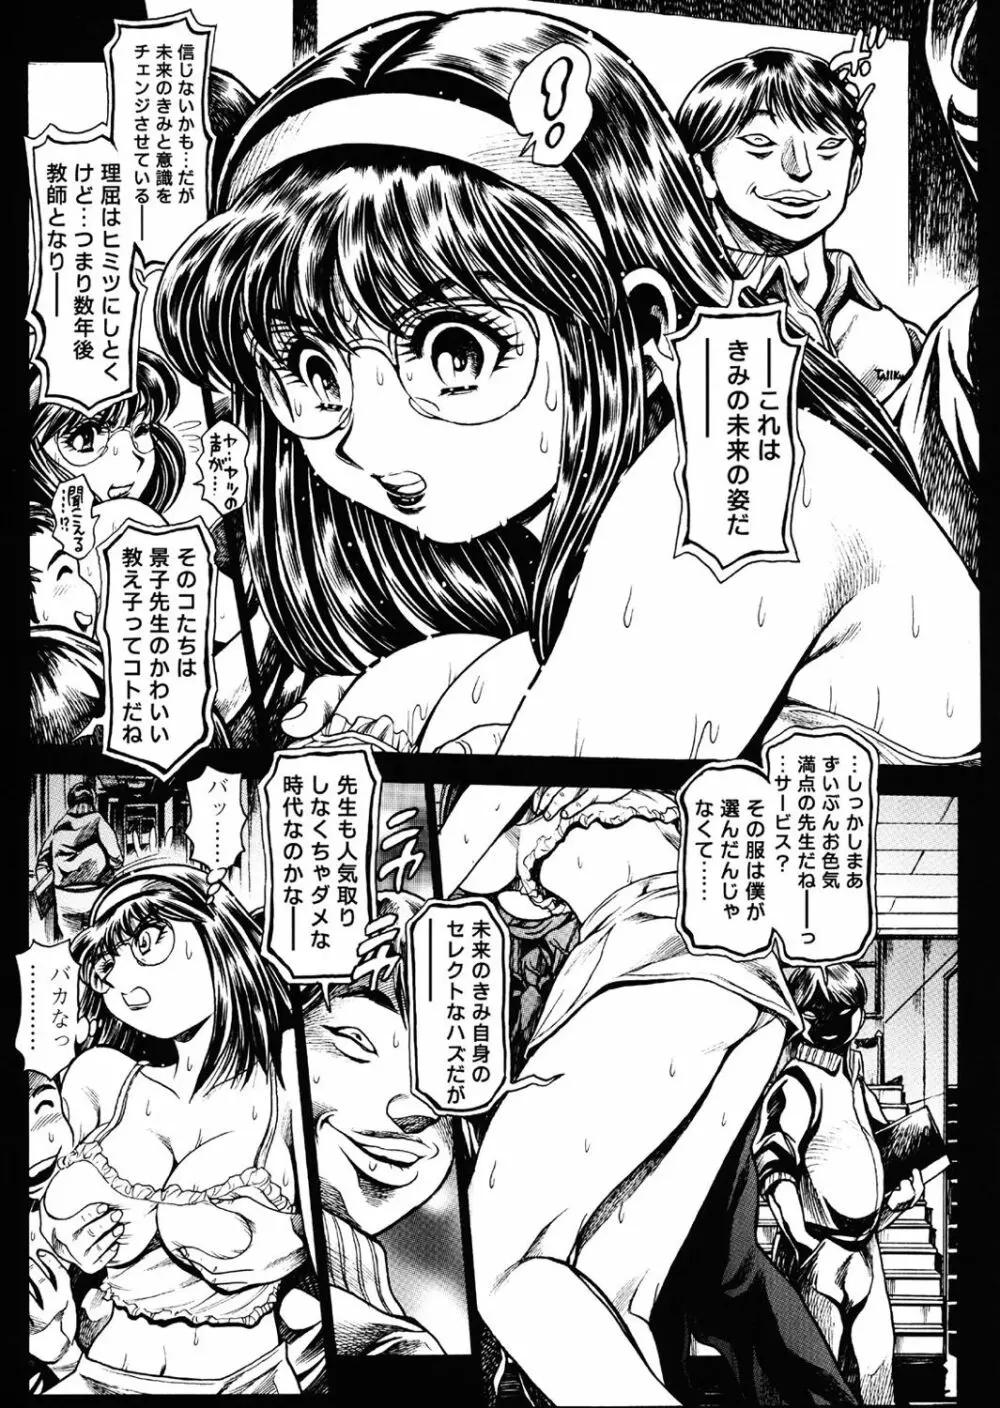 [Chataro] Nami SOS! 5 Girls – Before – Keiko 004-006 [JAP].cbr 41ページ